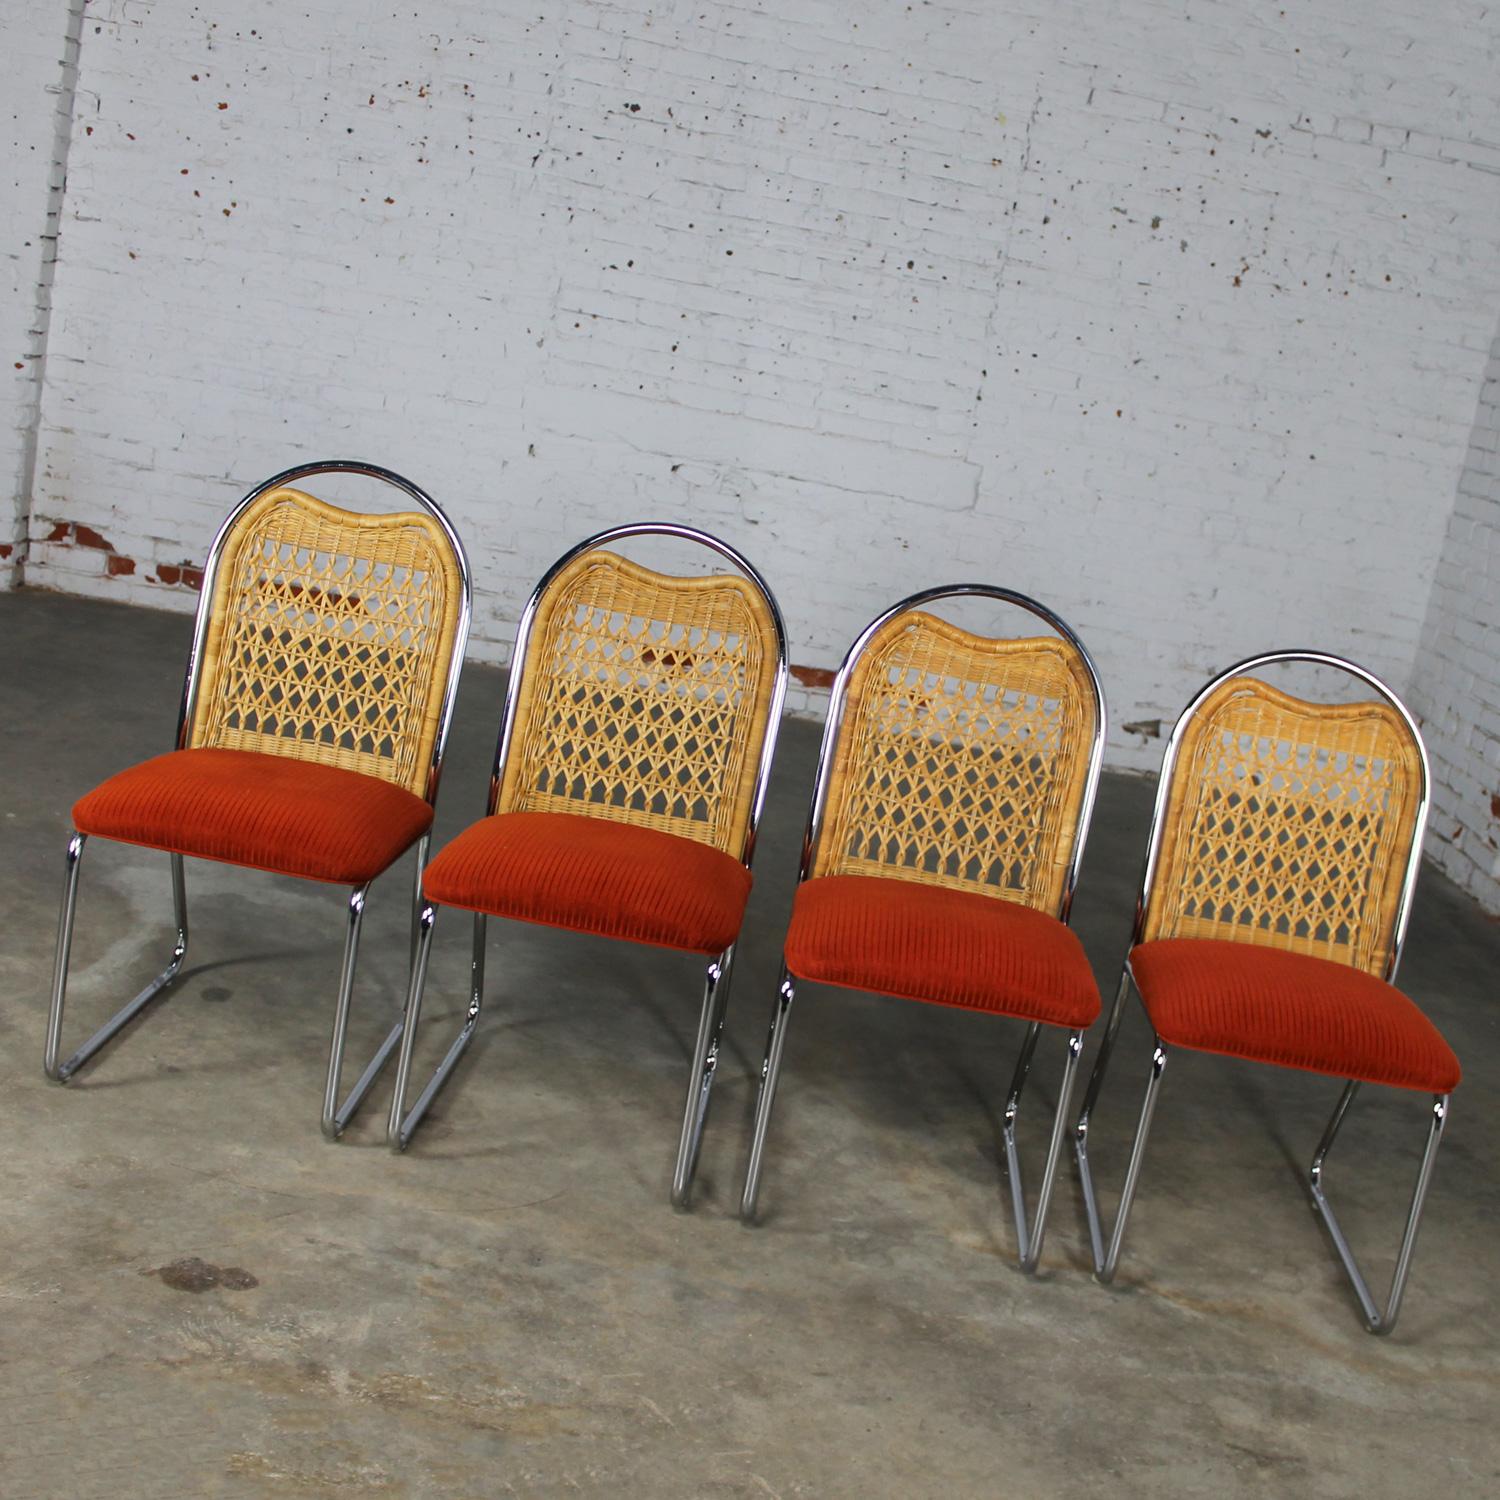 20th Century 1980’s Modern Daystrom Dining Chairs Chrome Wicker & Orange Fabric Set of 4 